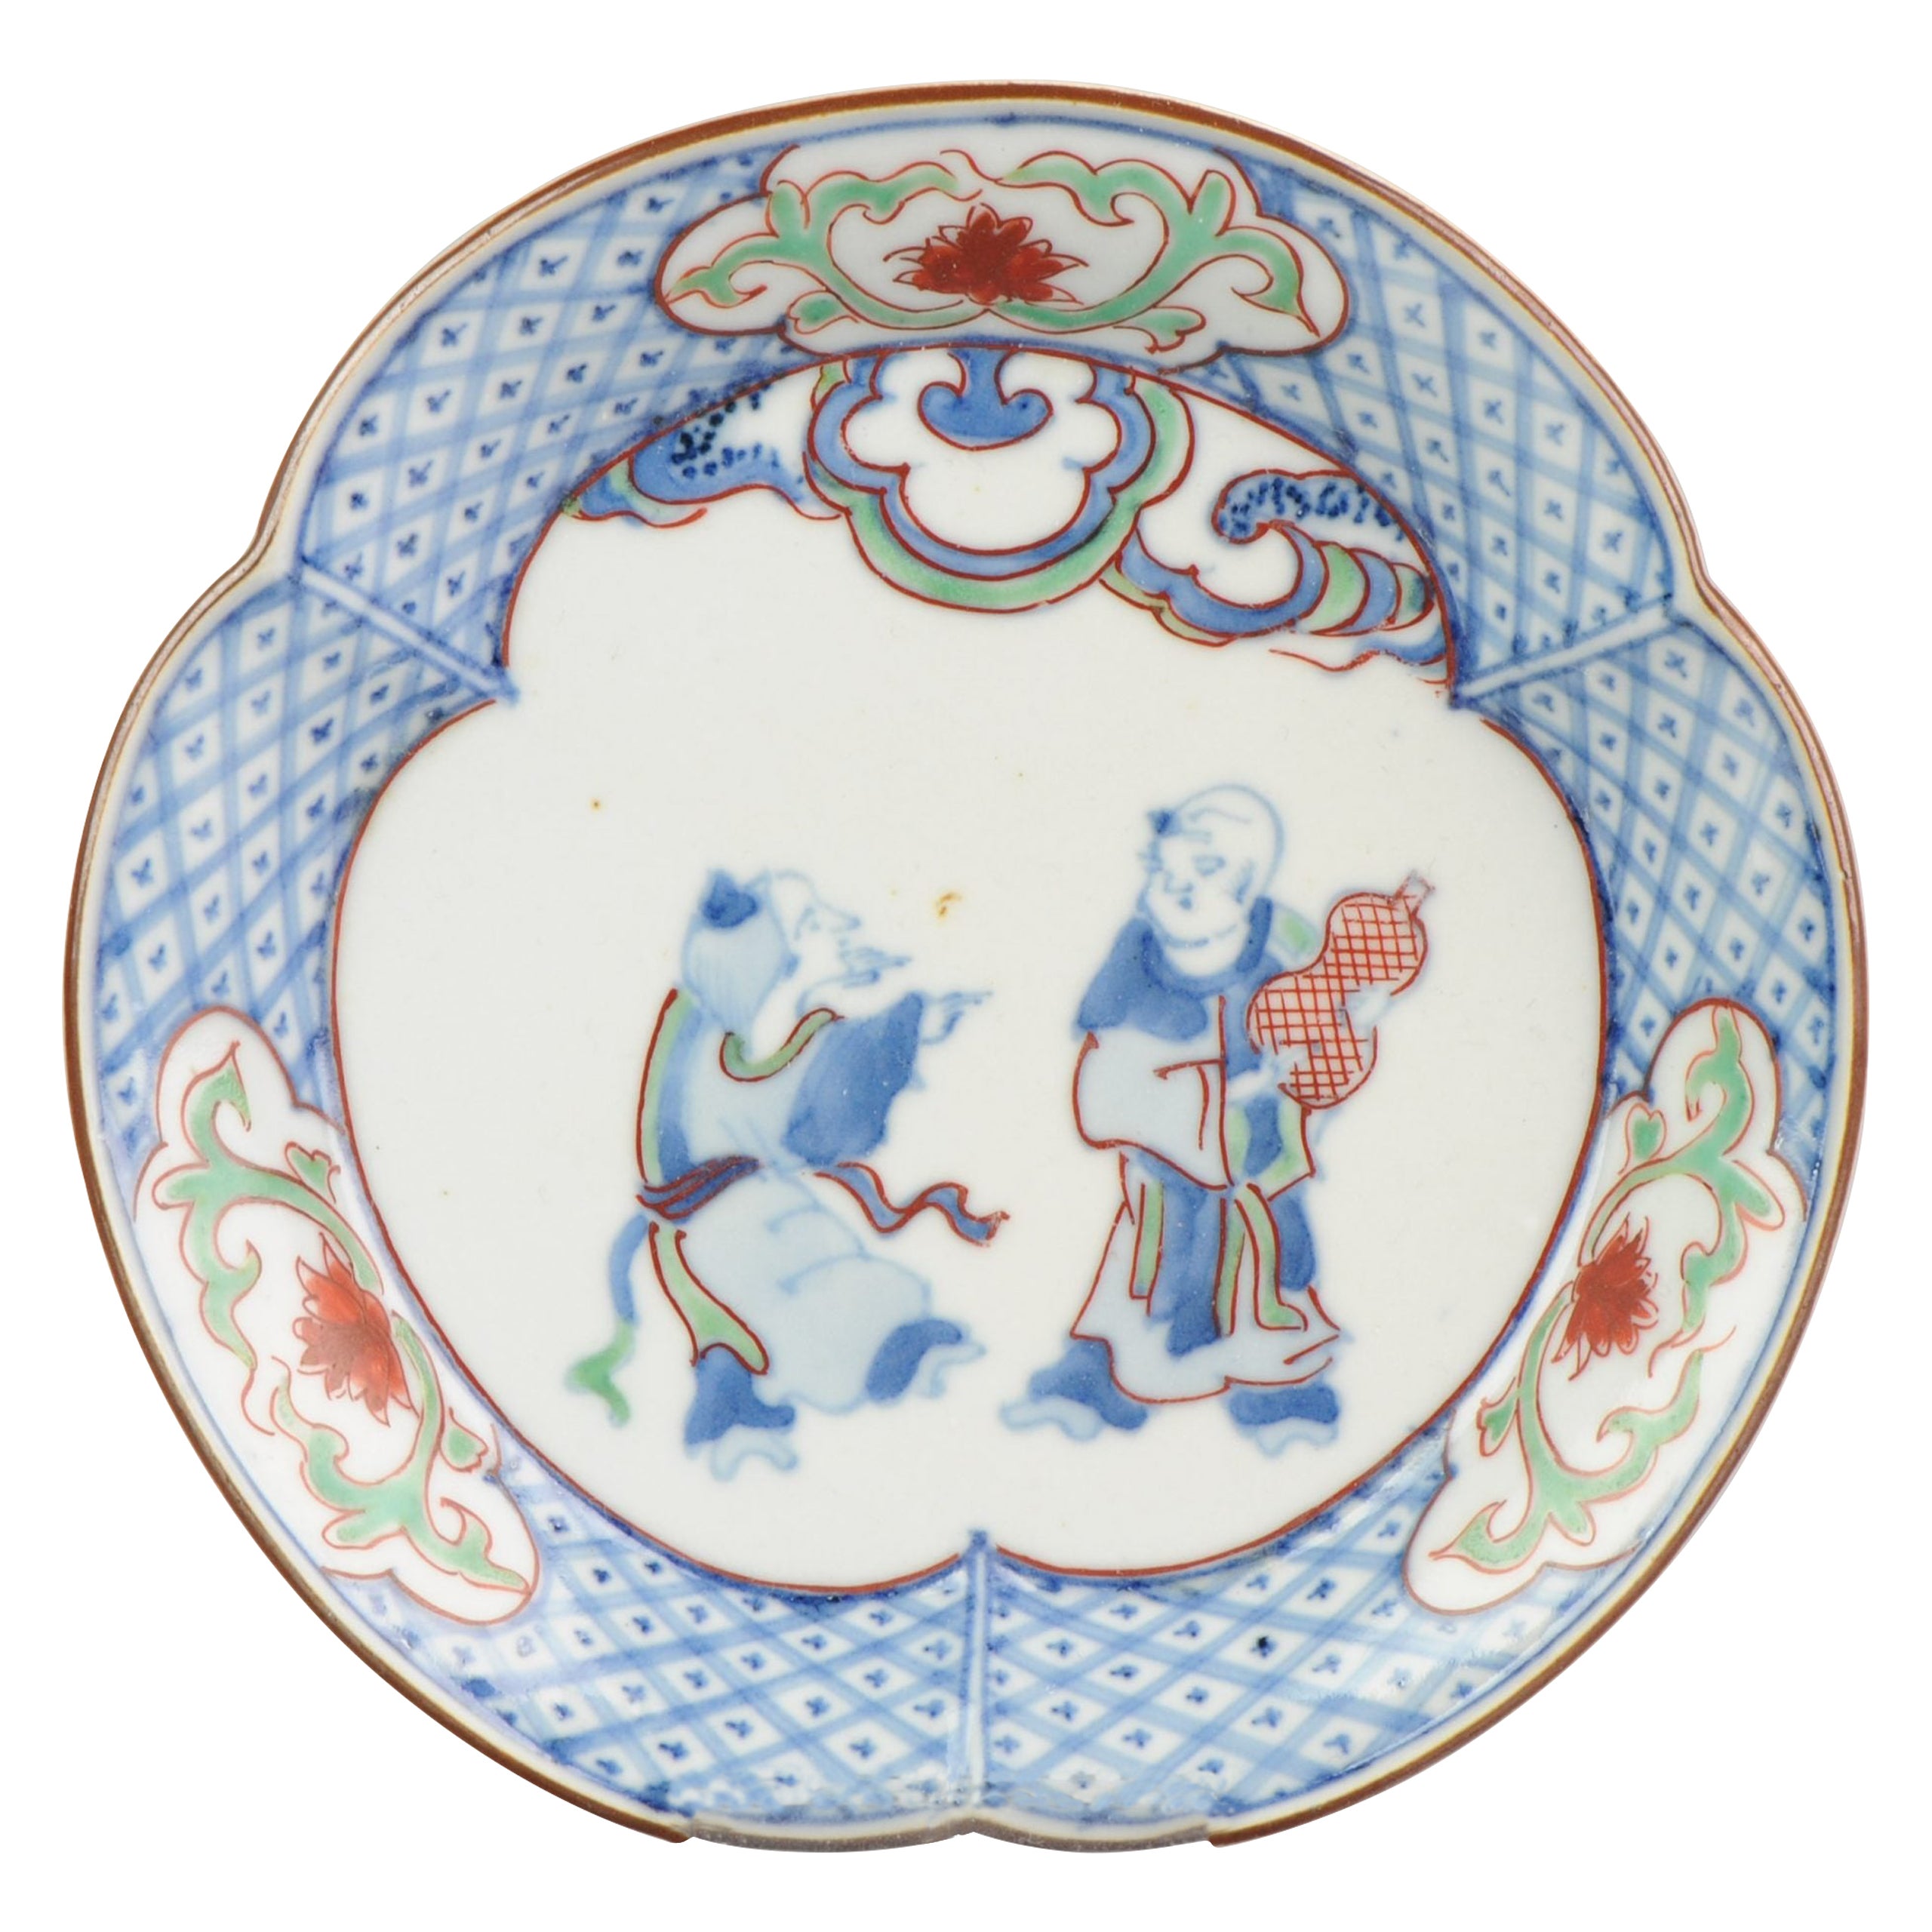 Top Quality Edo Period Japanese Porcelain Plate Antique ko-Kutani, ca 1660-80